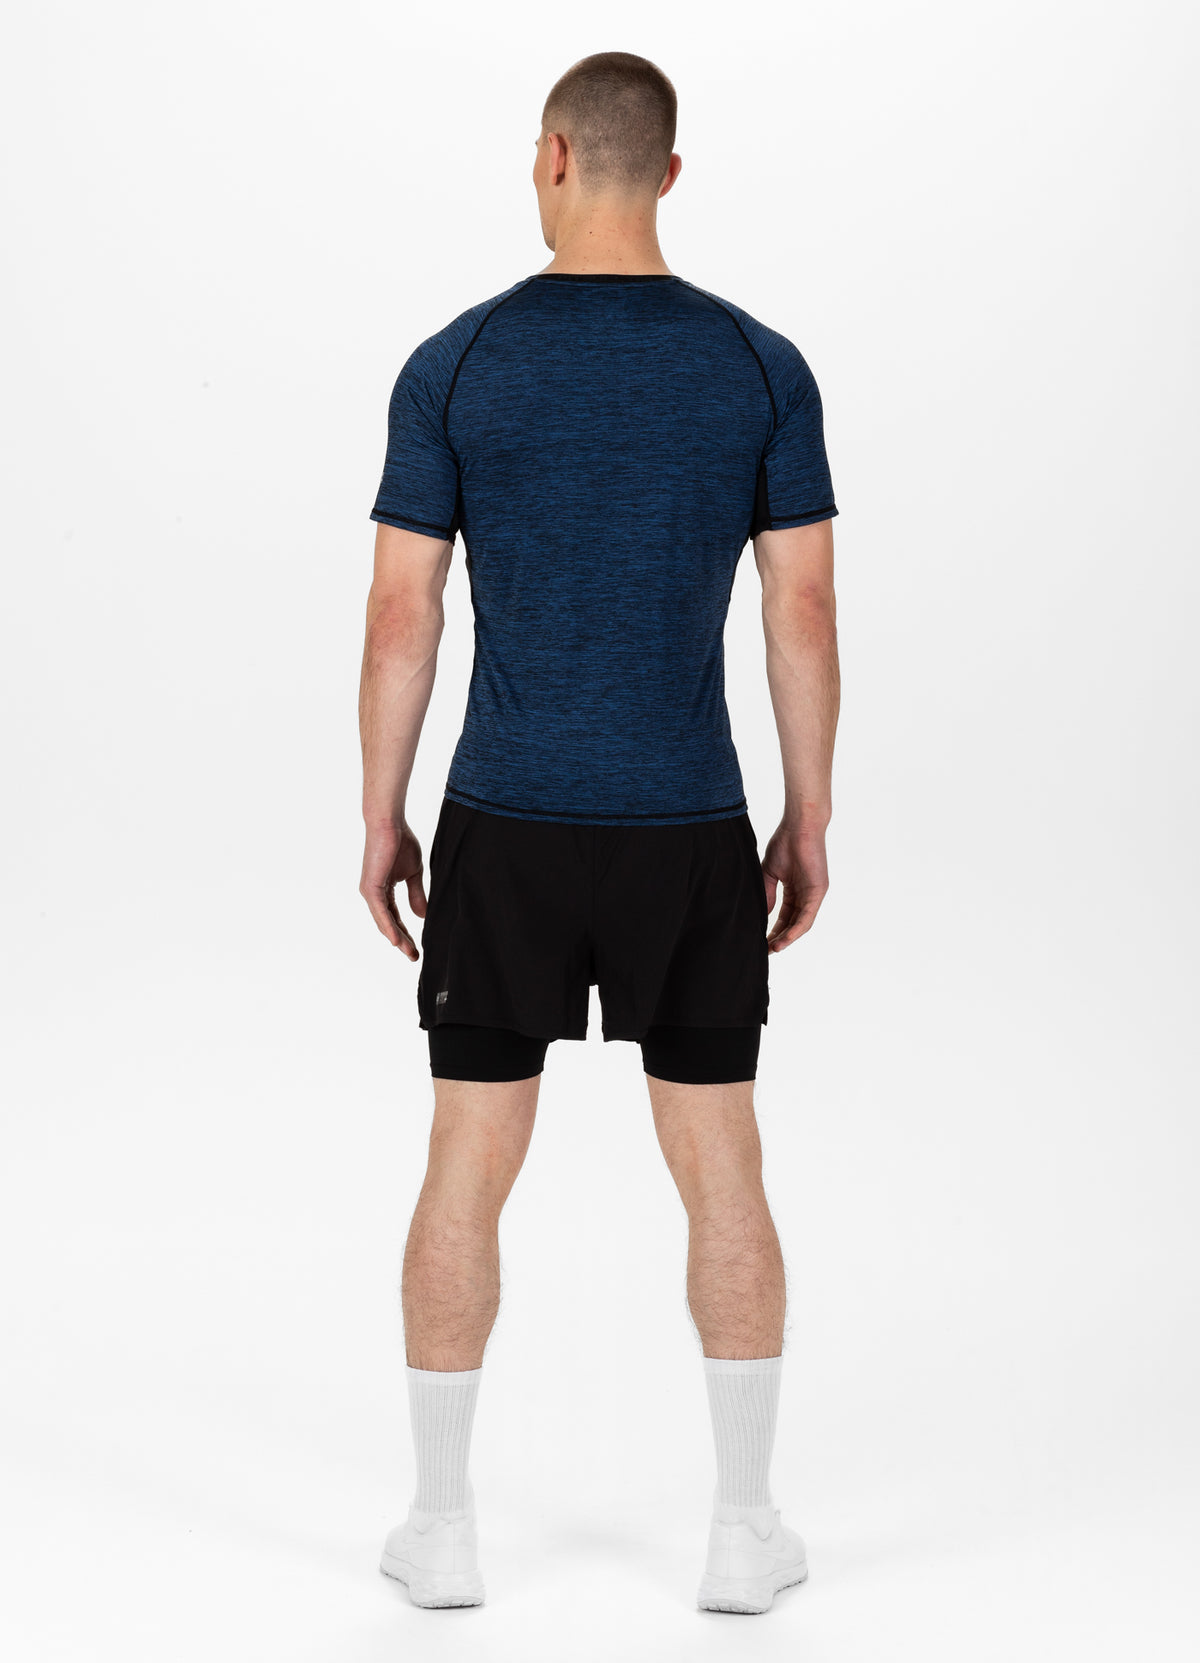 NEW LOGO Mesh Black Shorts - Pitbullstore.eu